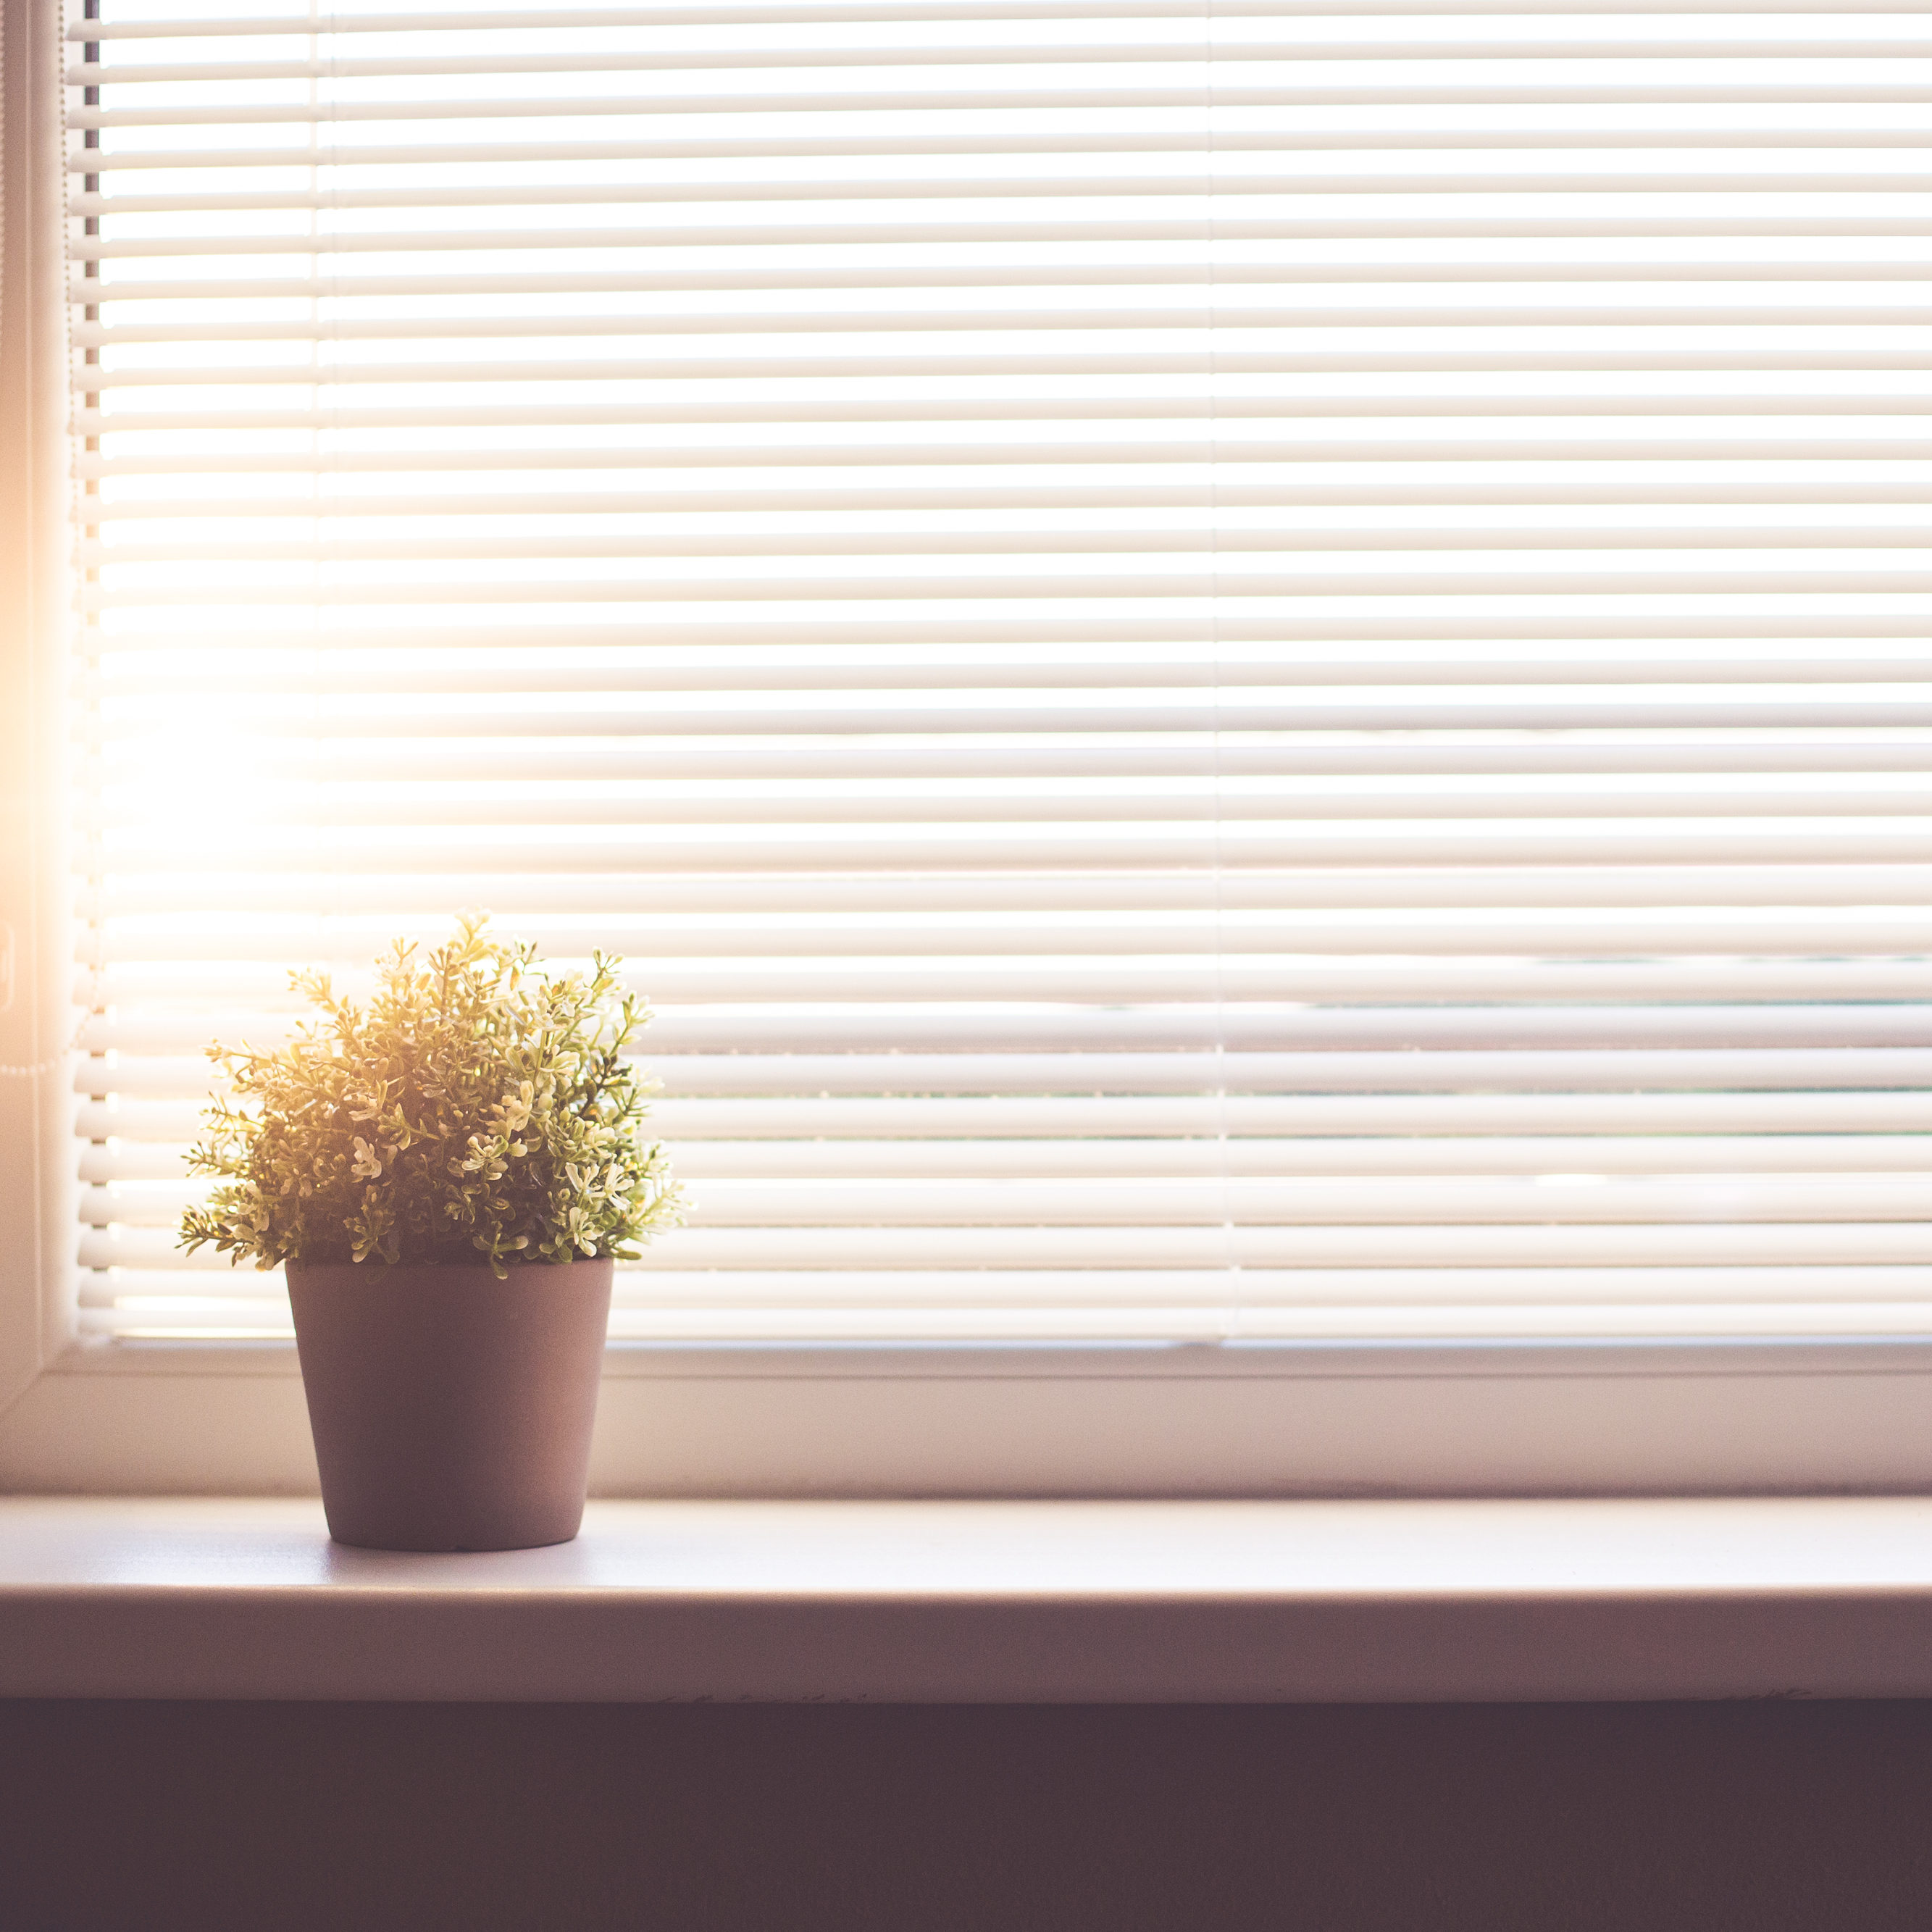 sun-shining-through-the-window-with-sun-blind-picjumbo-com